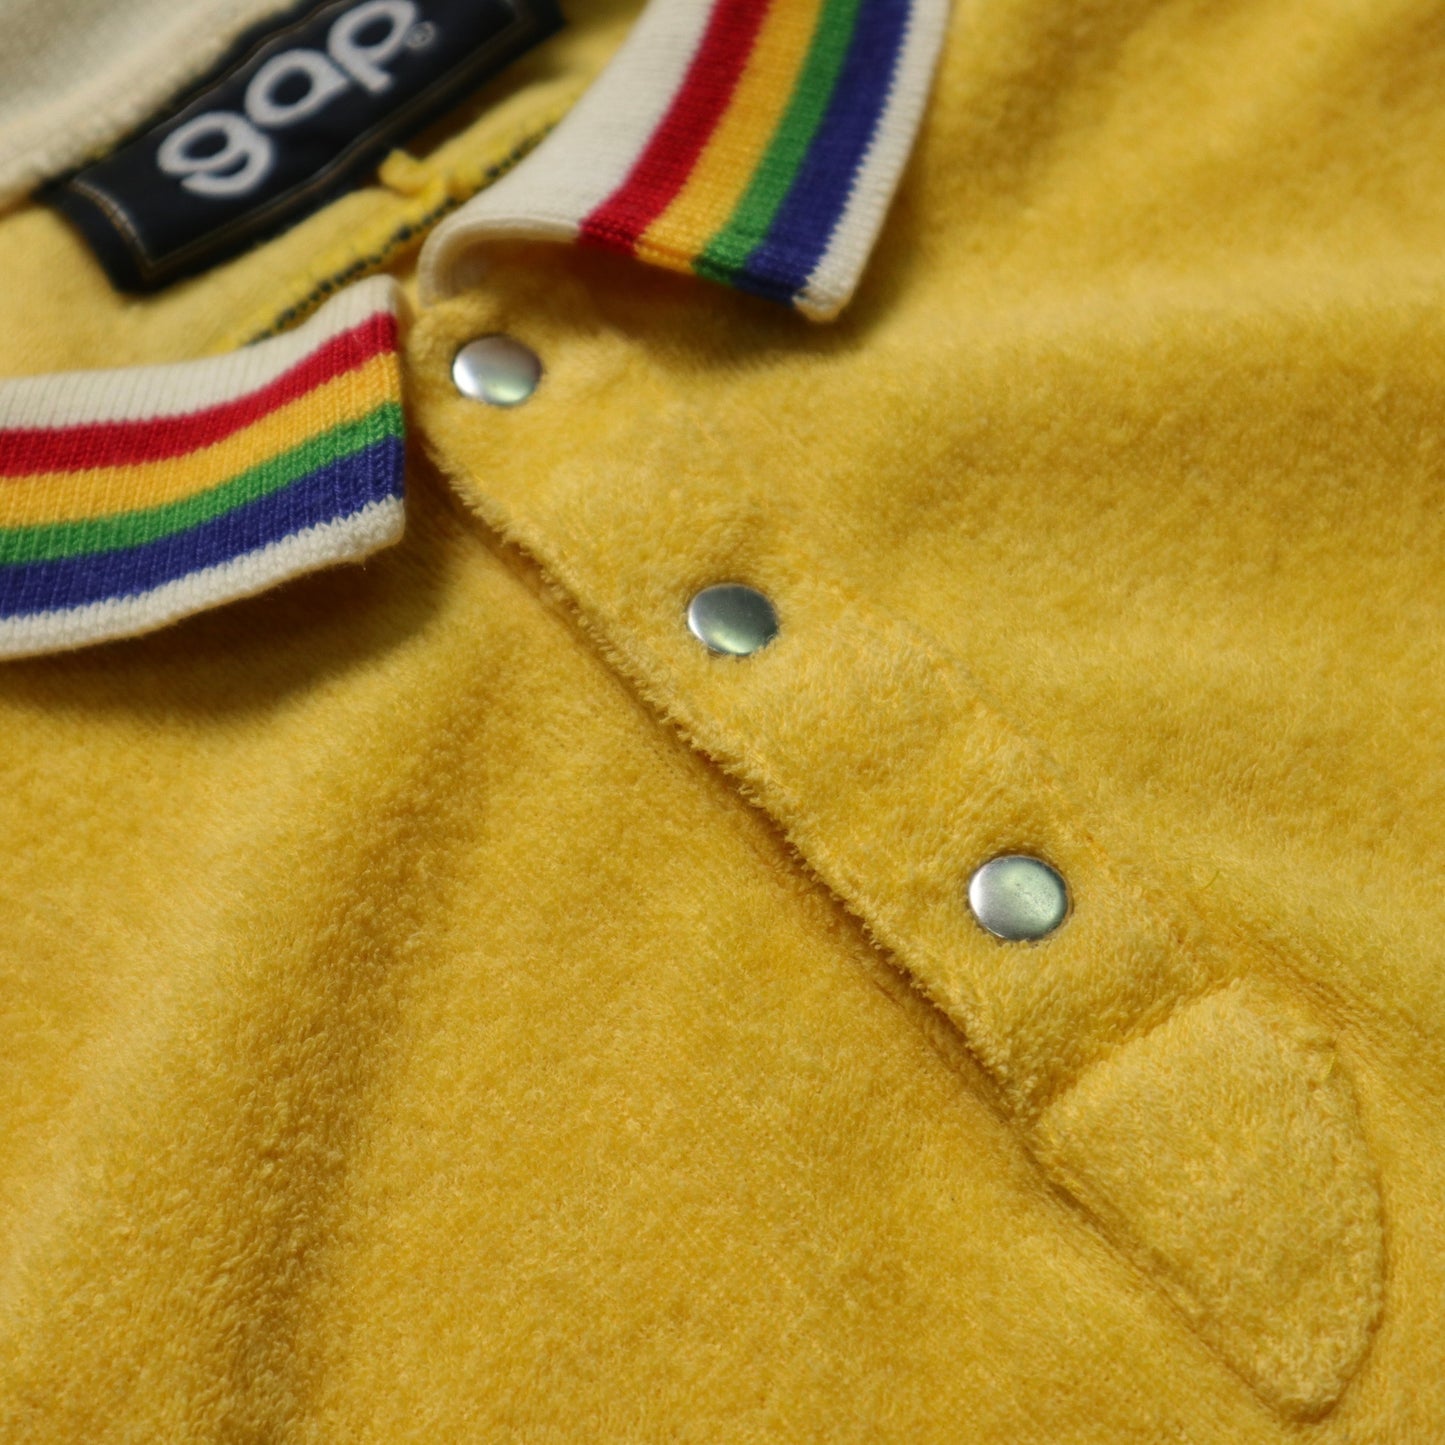 70-80s gap 黃底彩虹領毛巾布上衣 Terry cloth